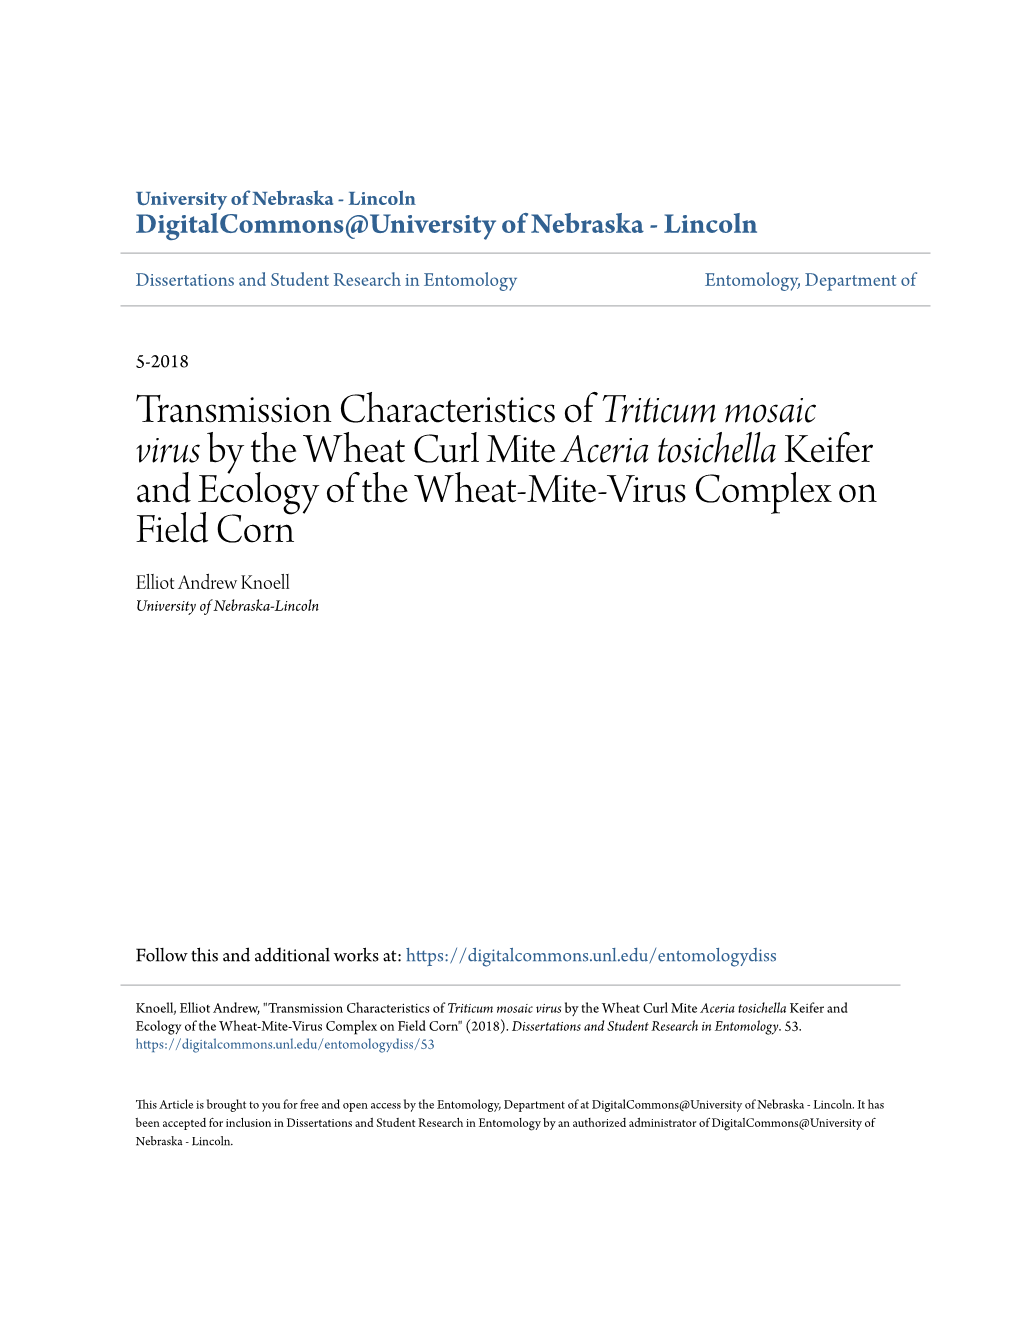 Transmission Characteristics of Triticum Mosaic Virus by the Wheat